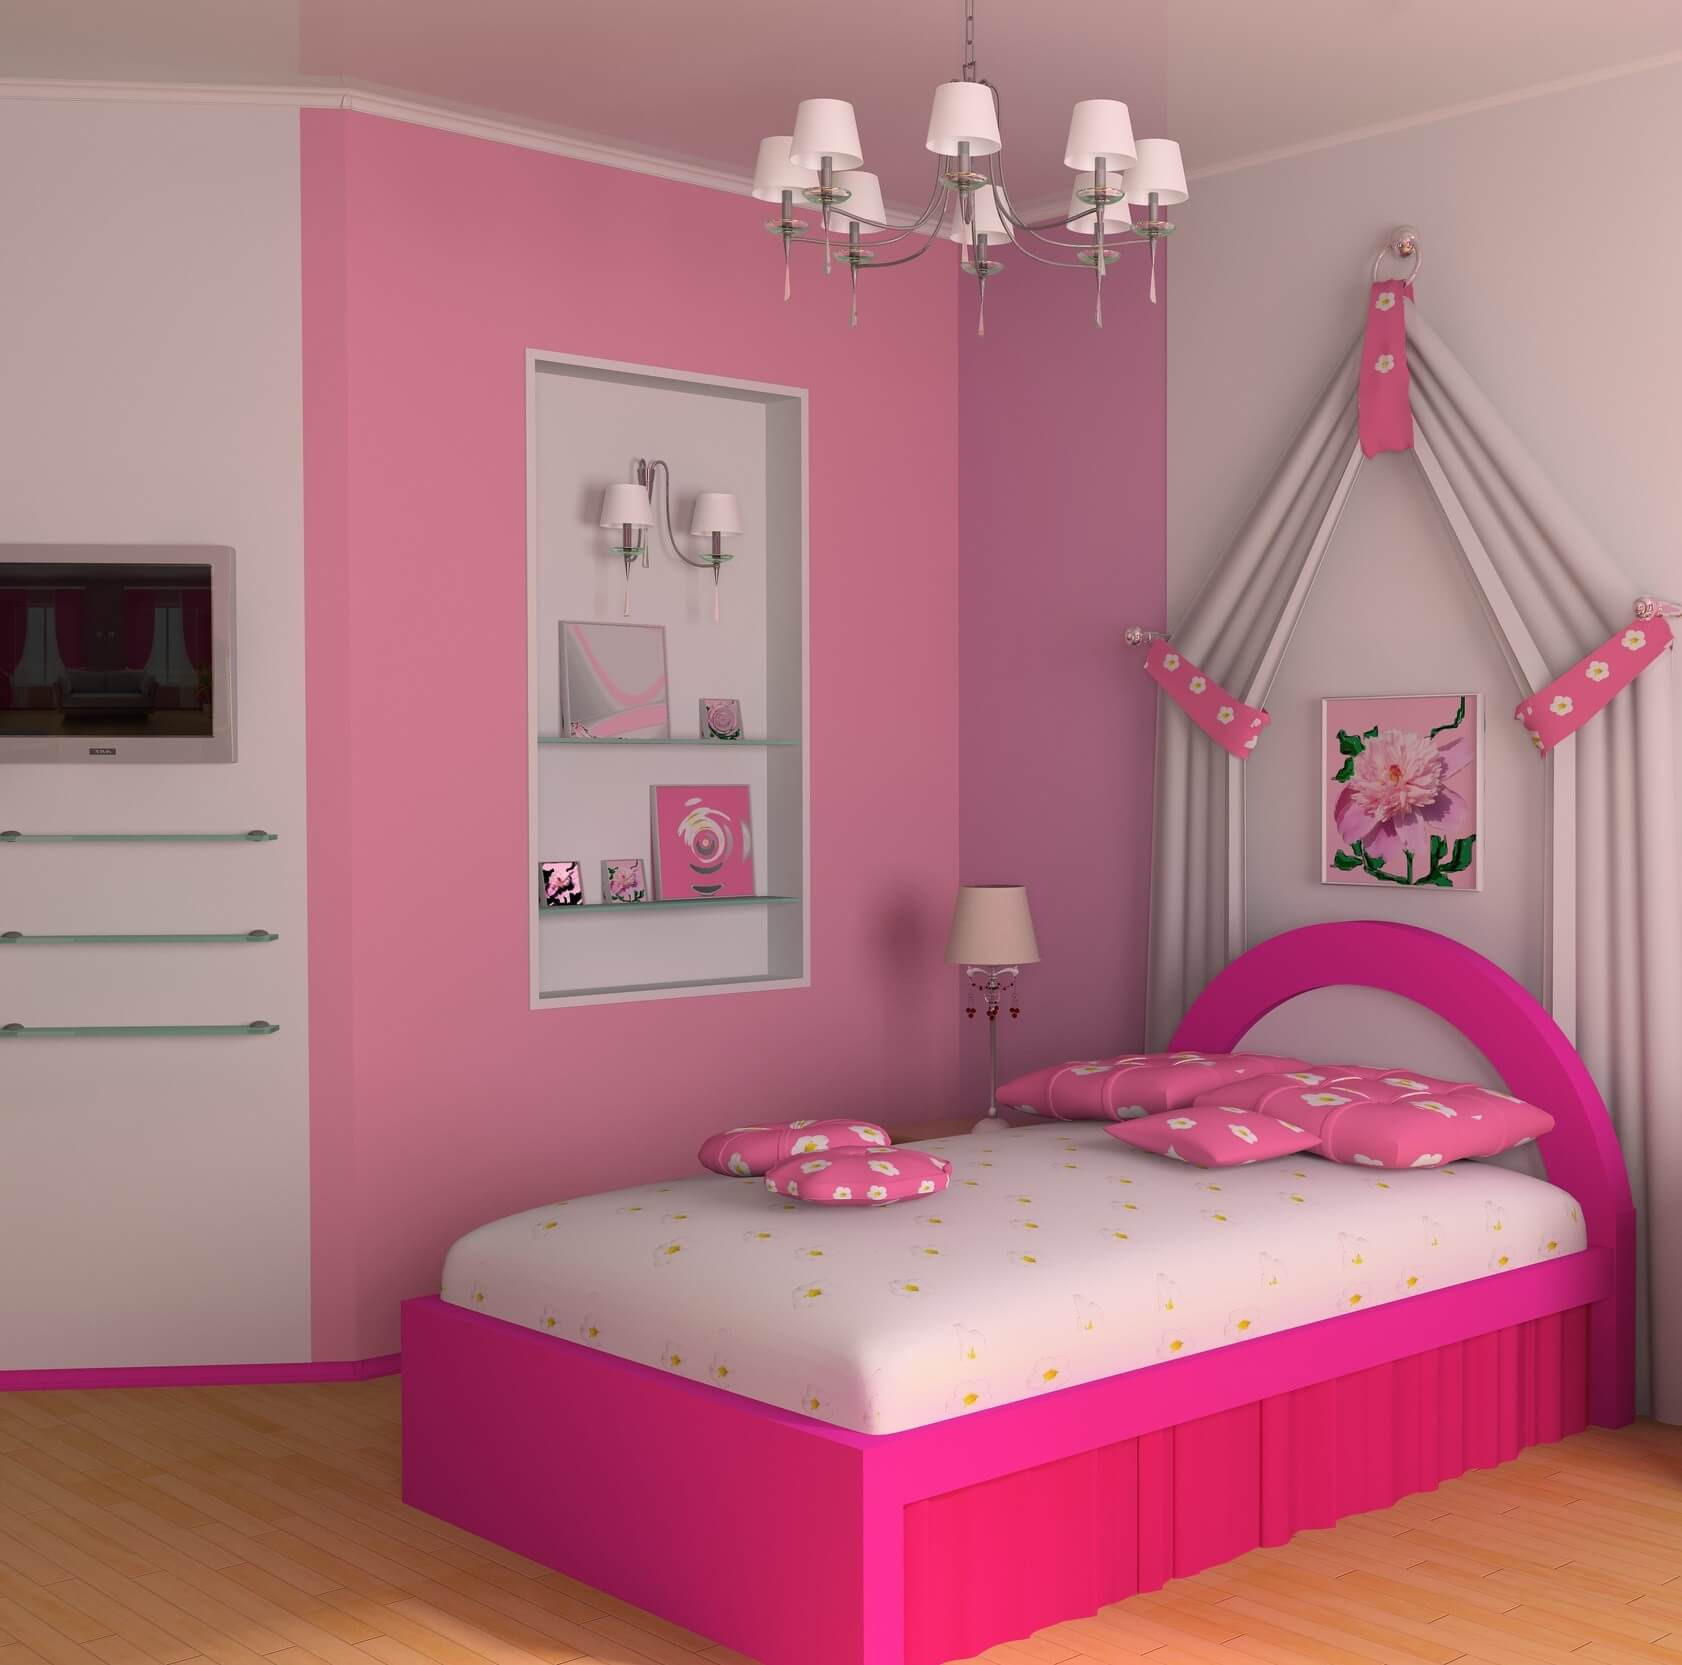 Teenage Girl Bedroom Furniture
 Ideas for Decorating a Girl Bedroom Furniture TheyDesign